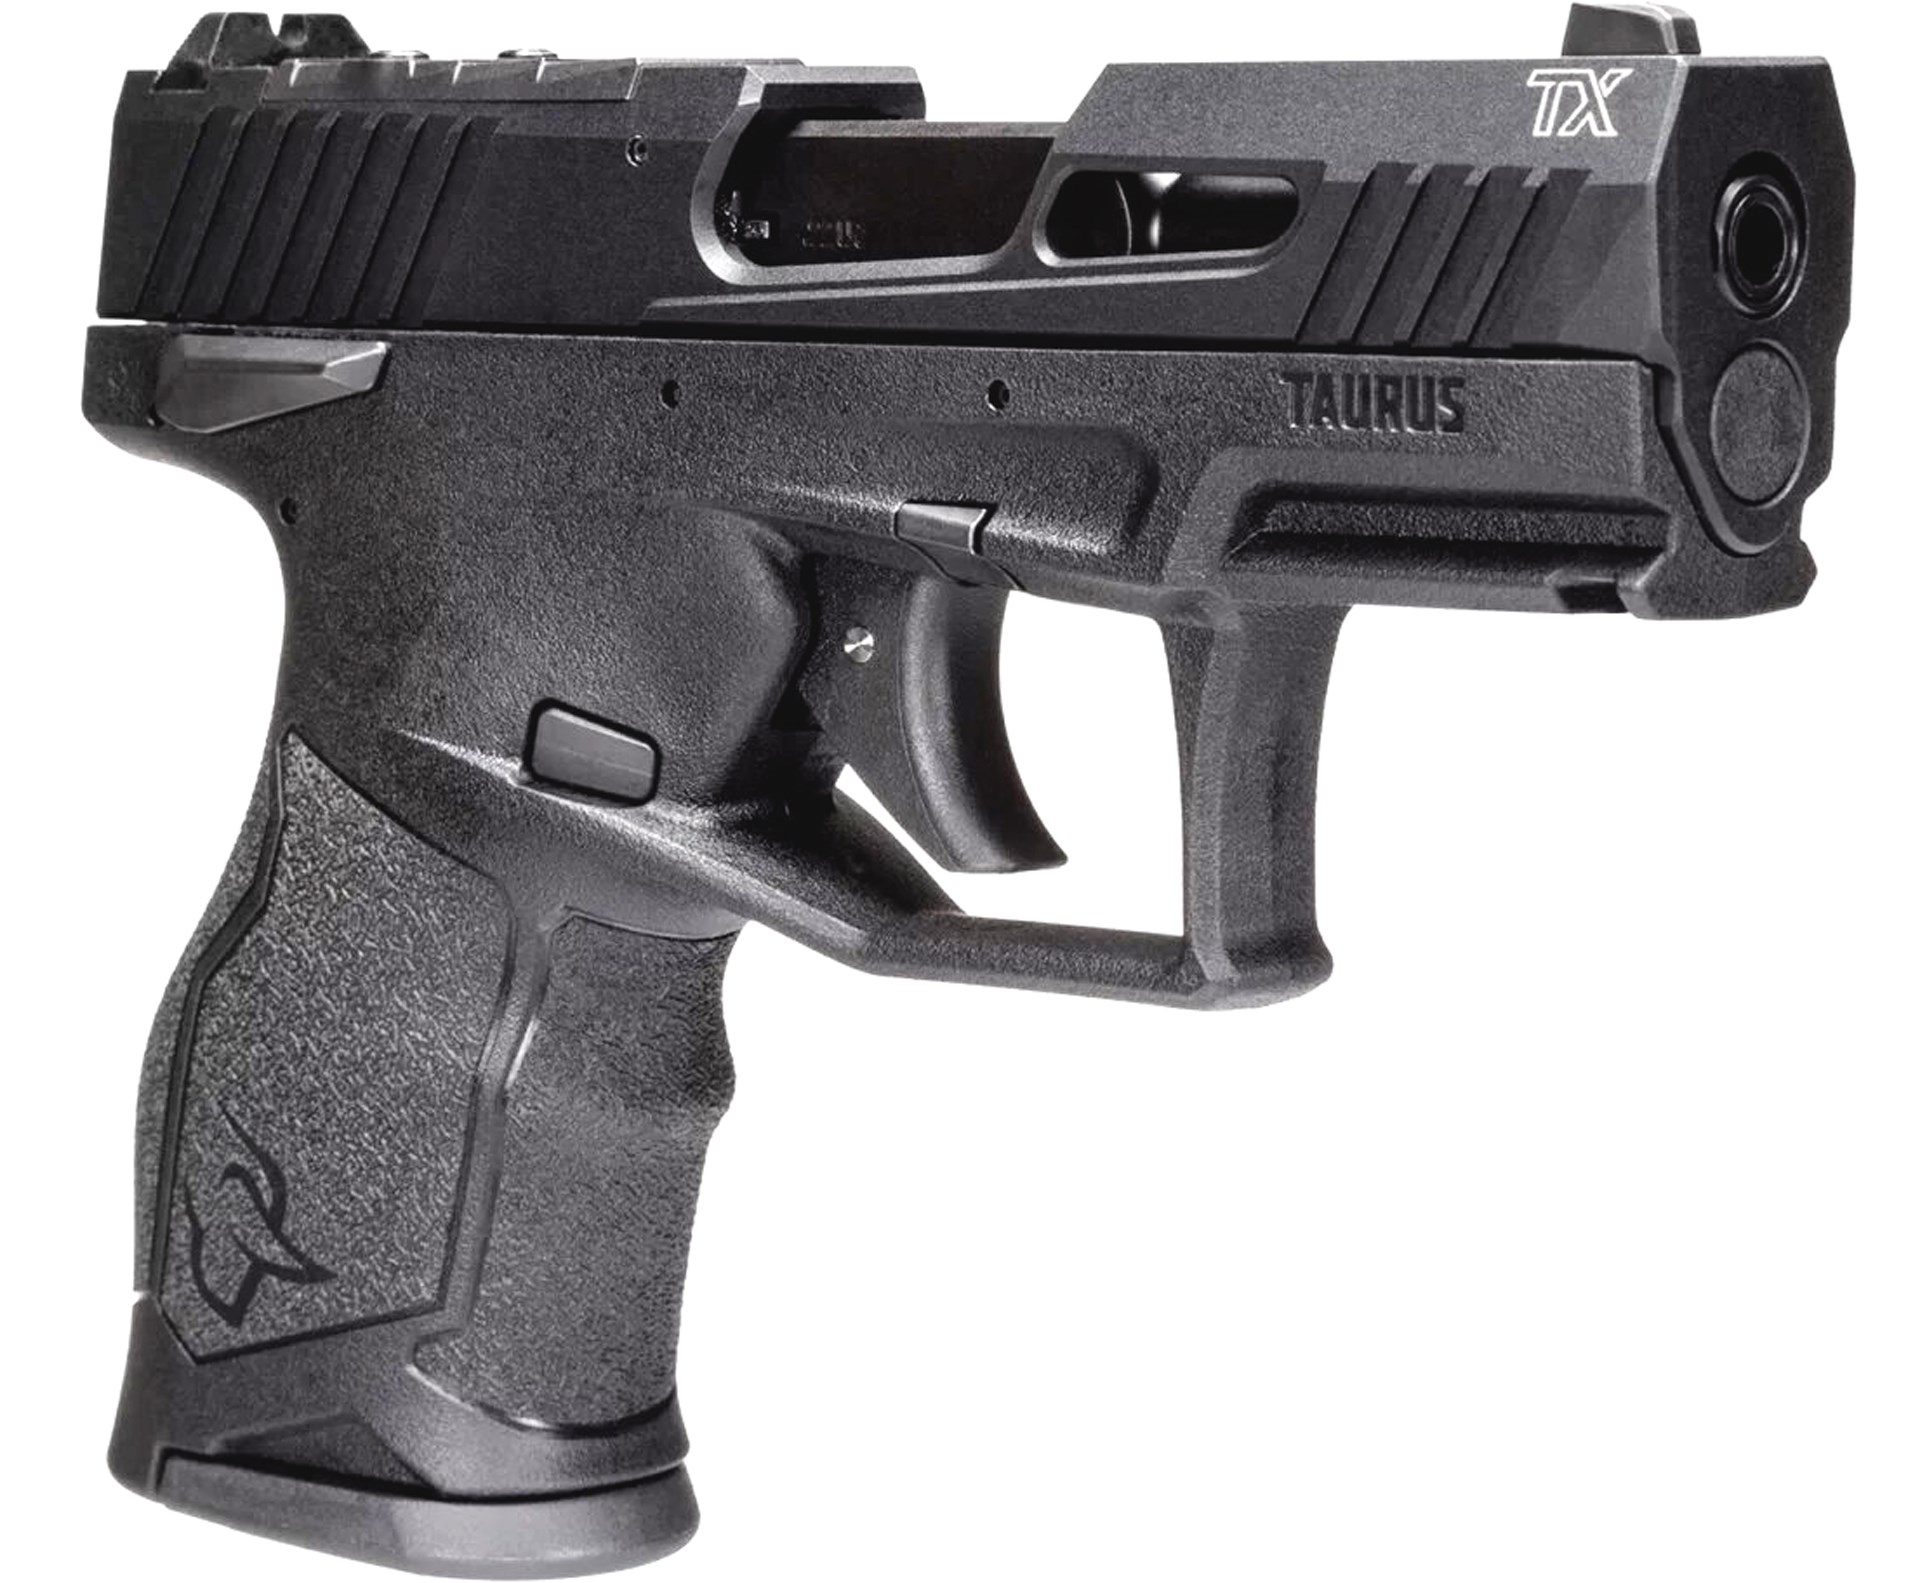 Taurus USA TX22 Compact pistol dynamic angle black gun semi-automatic .22lr rimfire defense personal protection tool